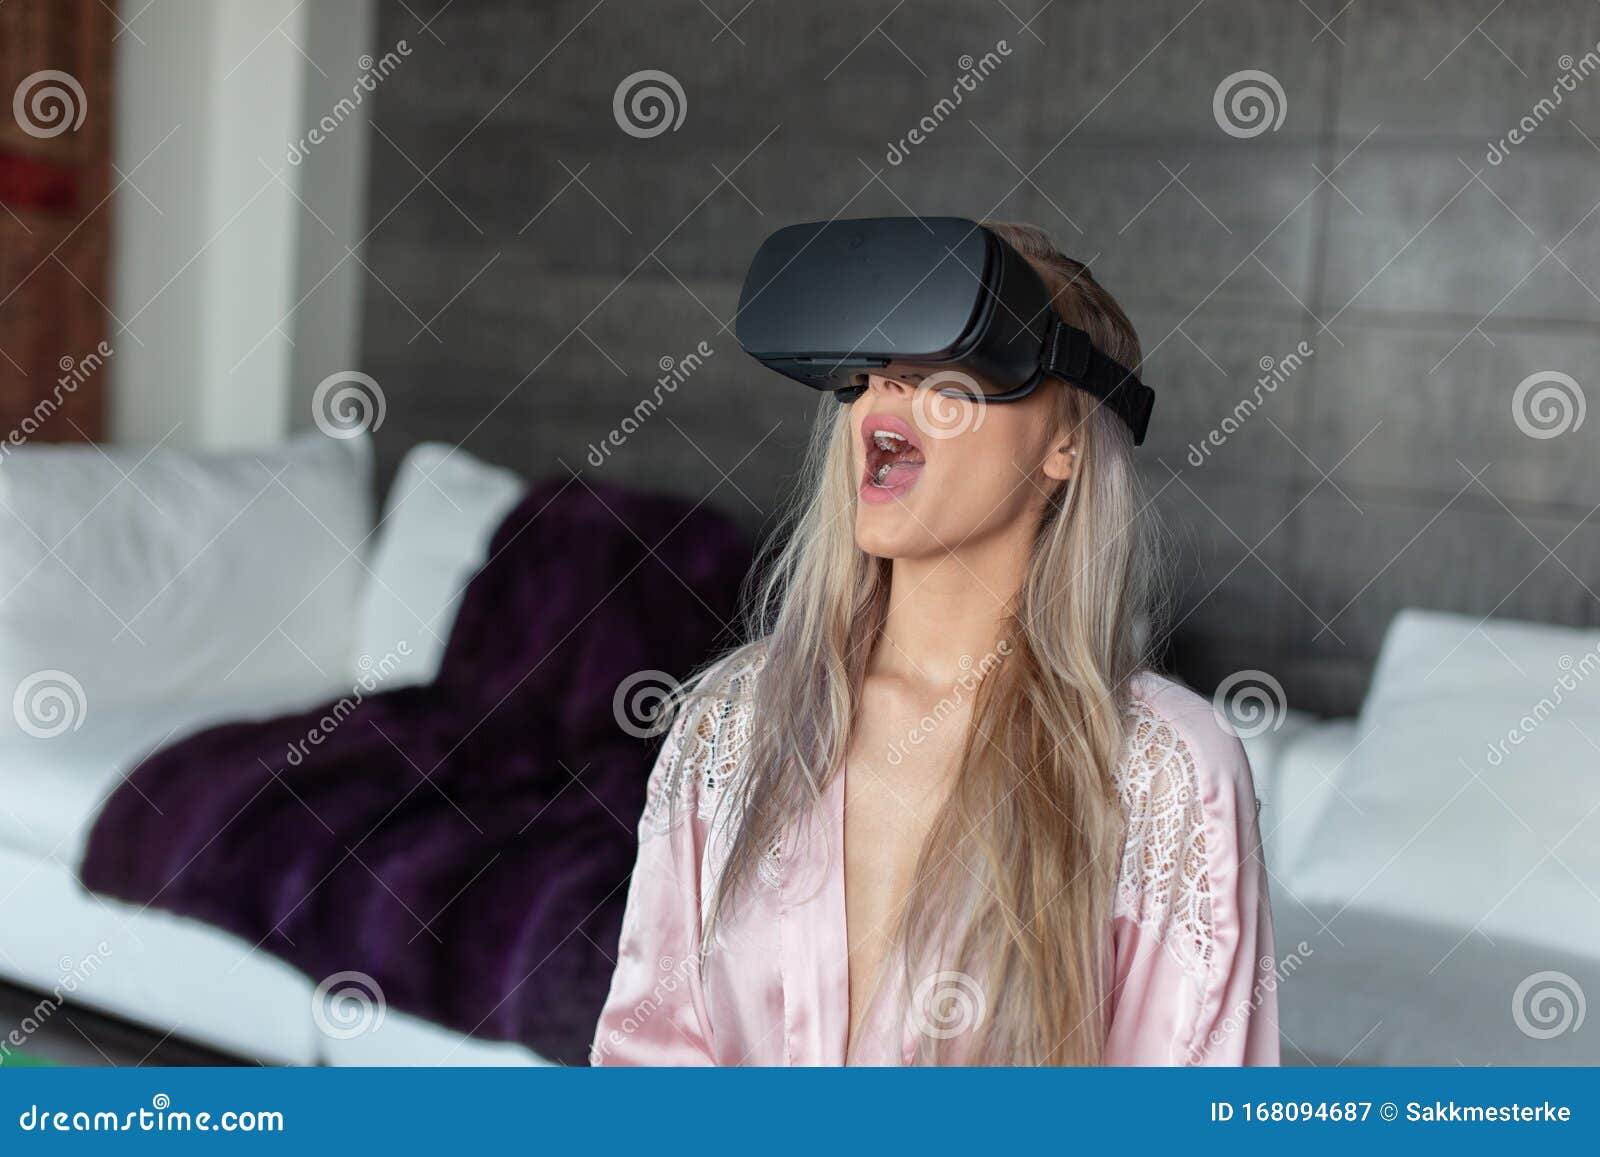 Vr lesbian 21 Virtual